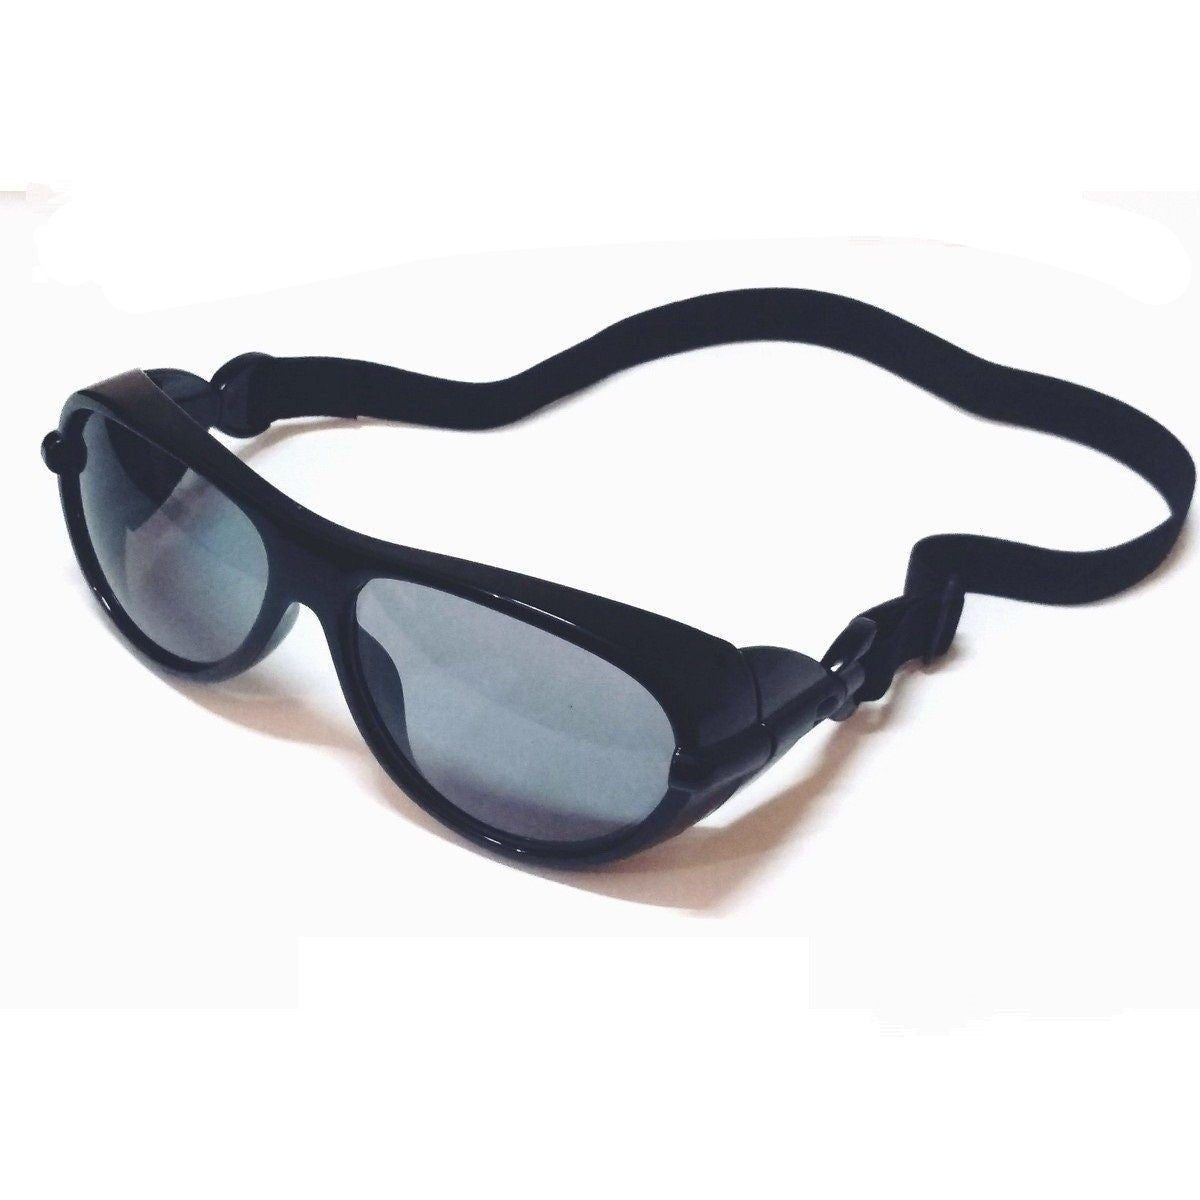 Black Frame Grey Lens Prescription Biker Cycling Driving Glasses Sunglasses with Strap